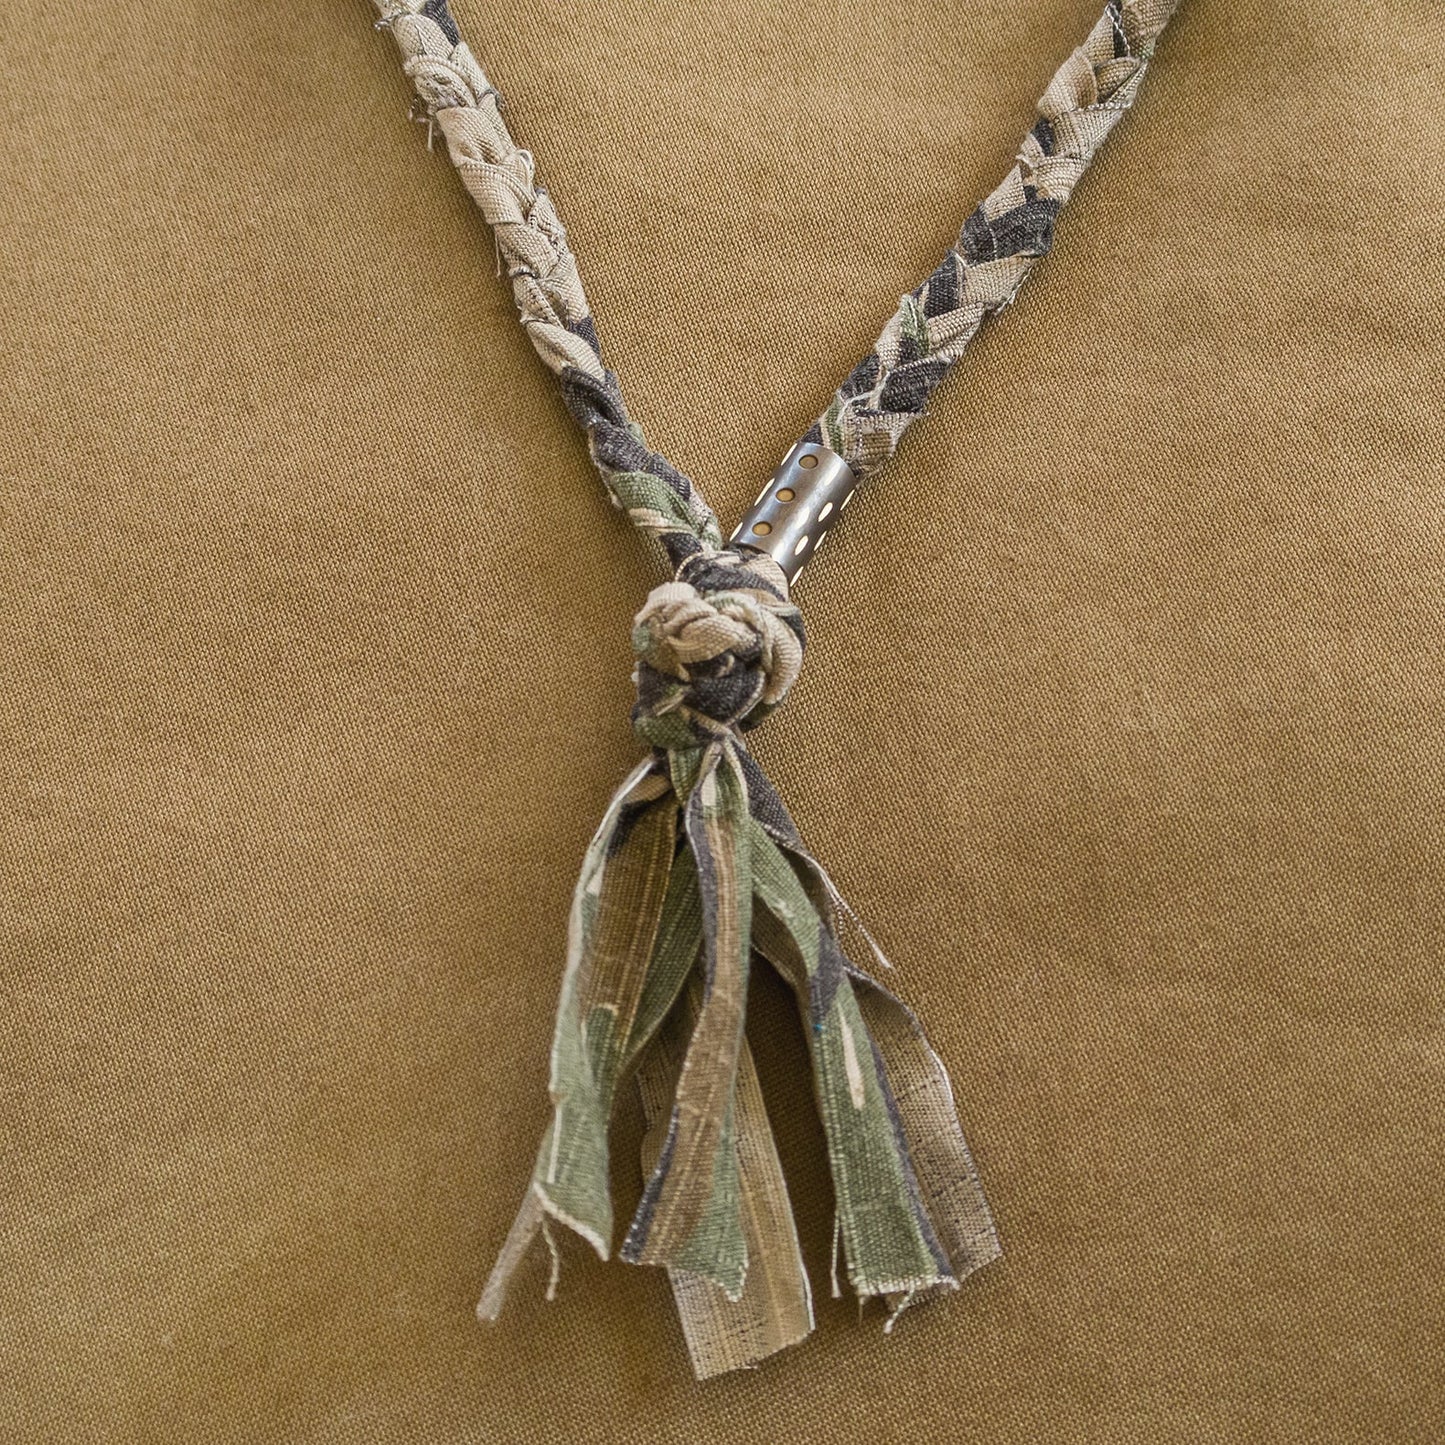 Borali - Necto braided necklace BCD-GR201 (Damaged)